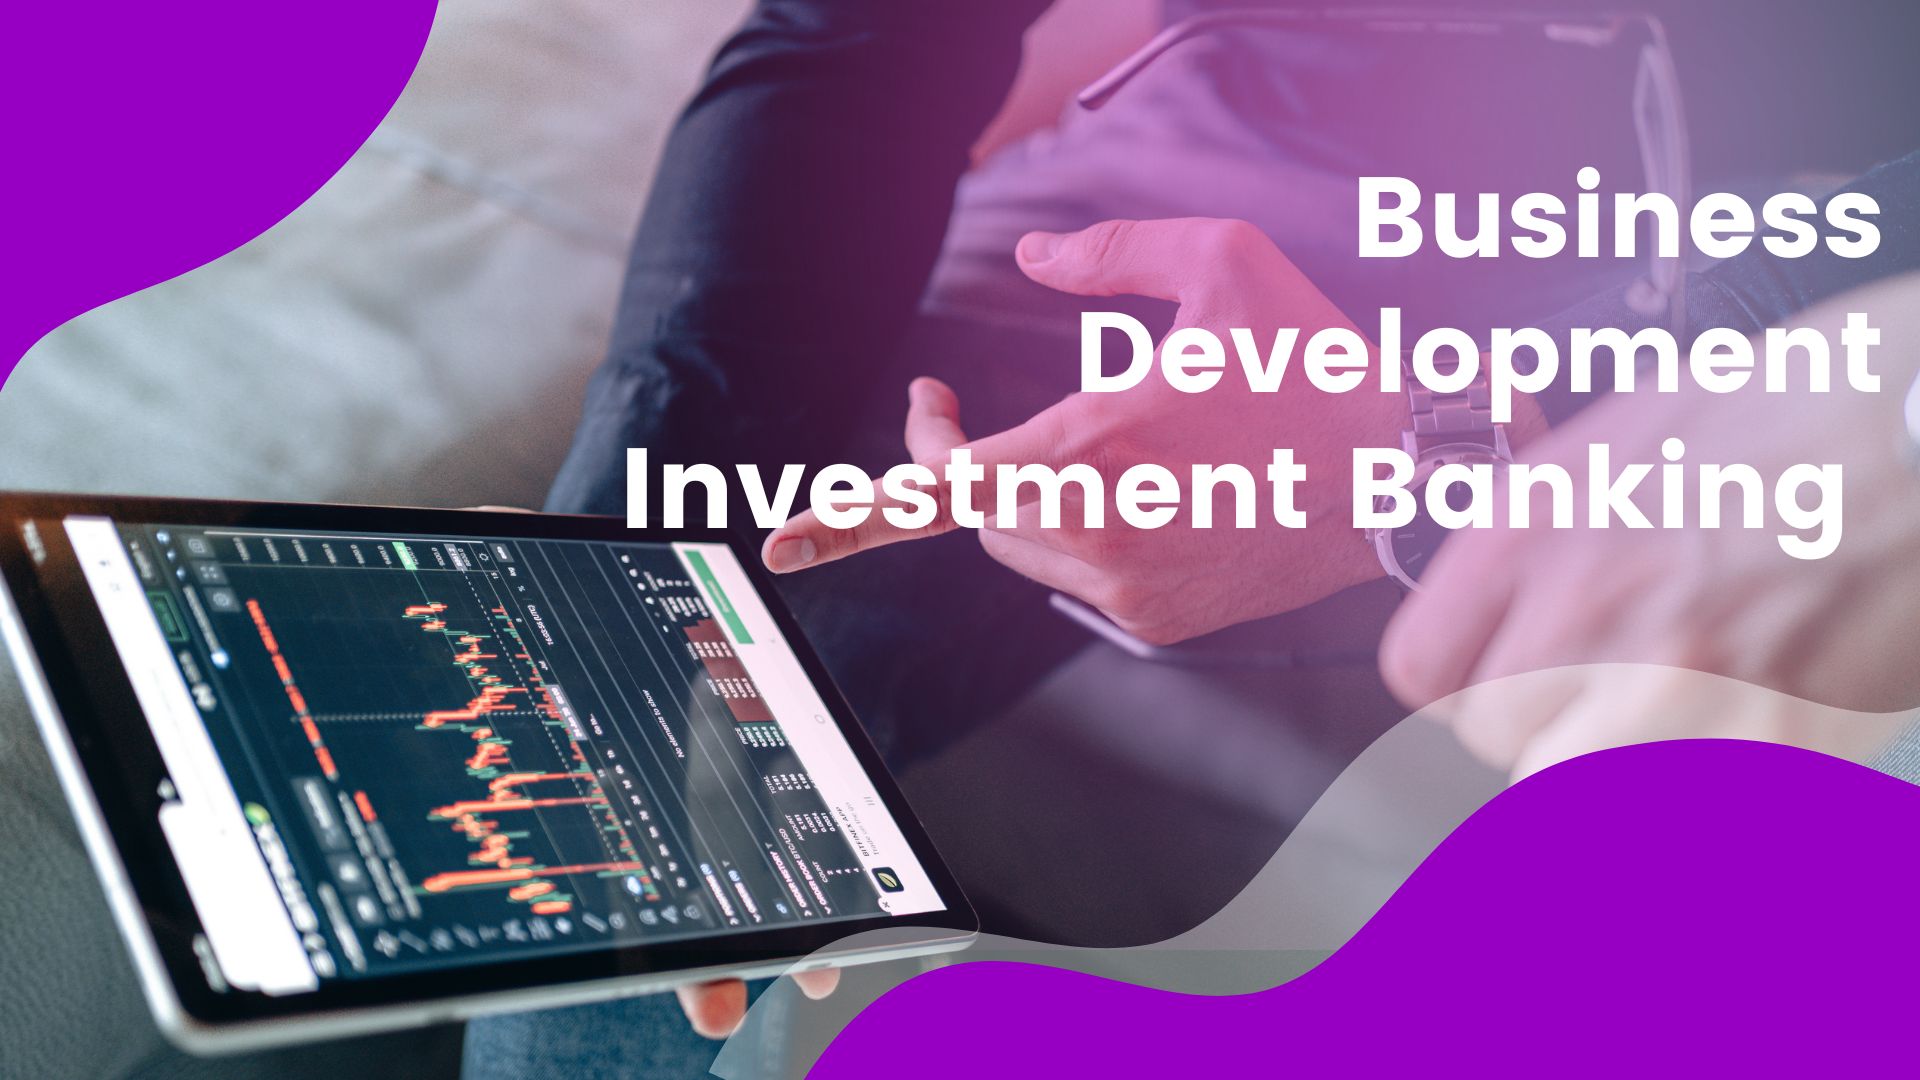 Business Development Investment Banking